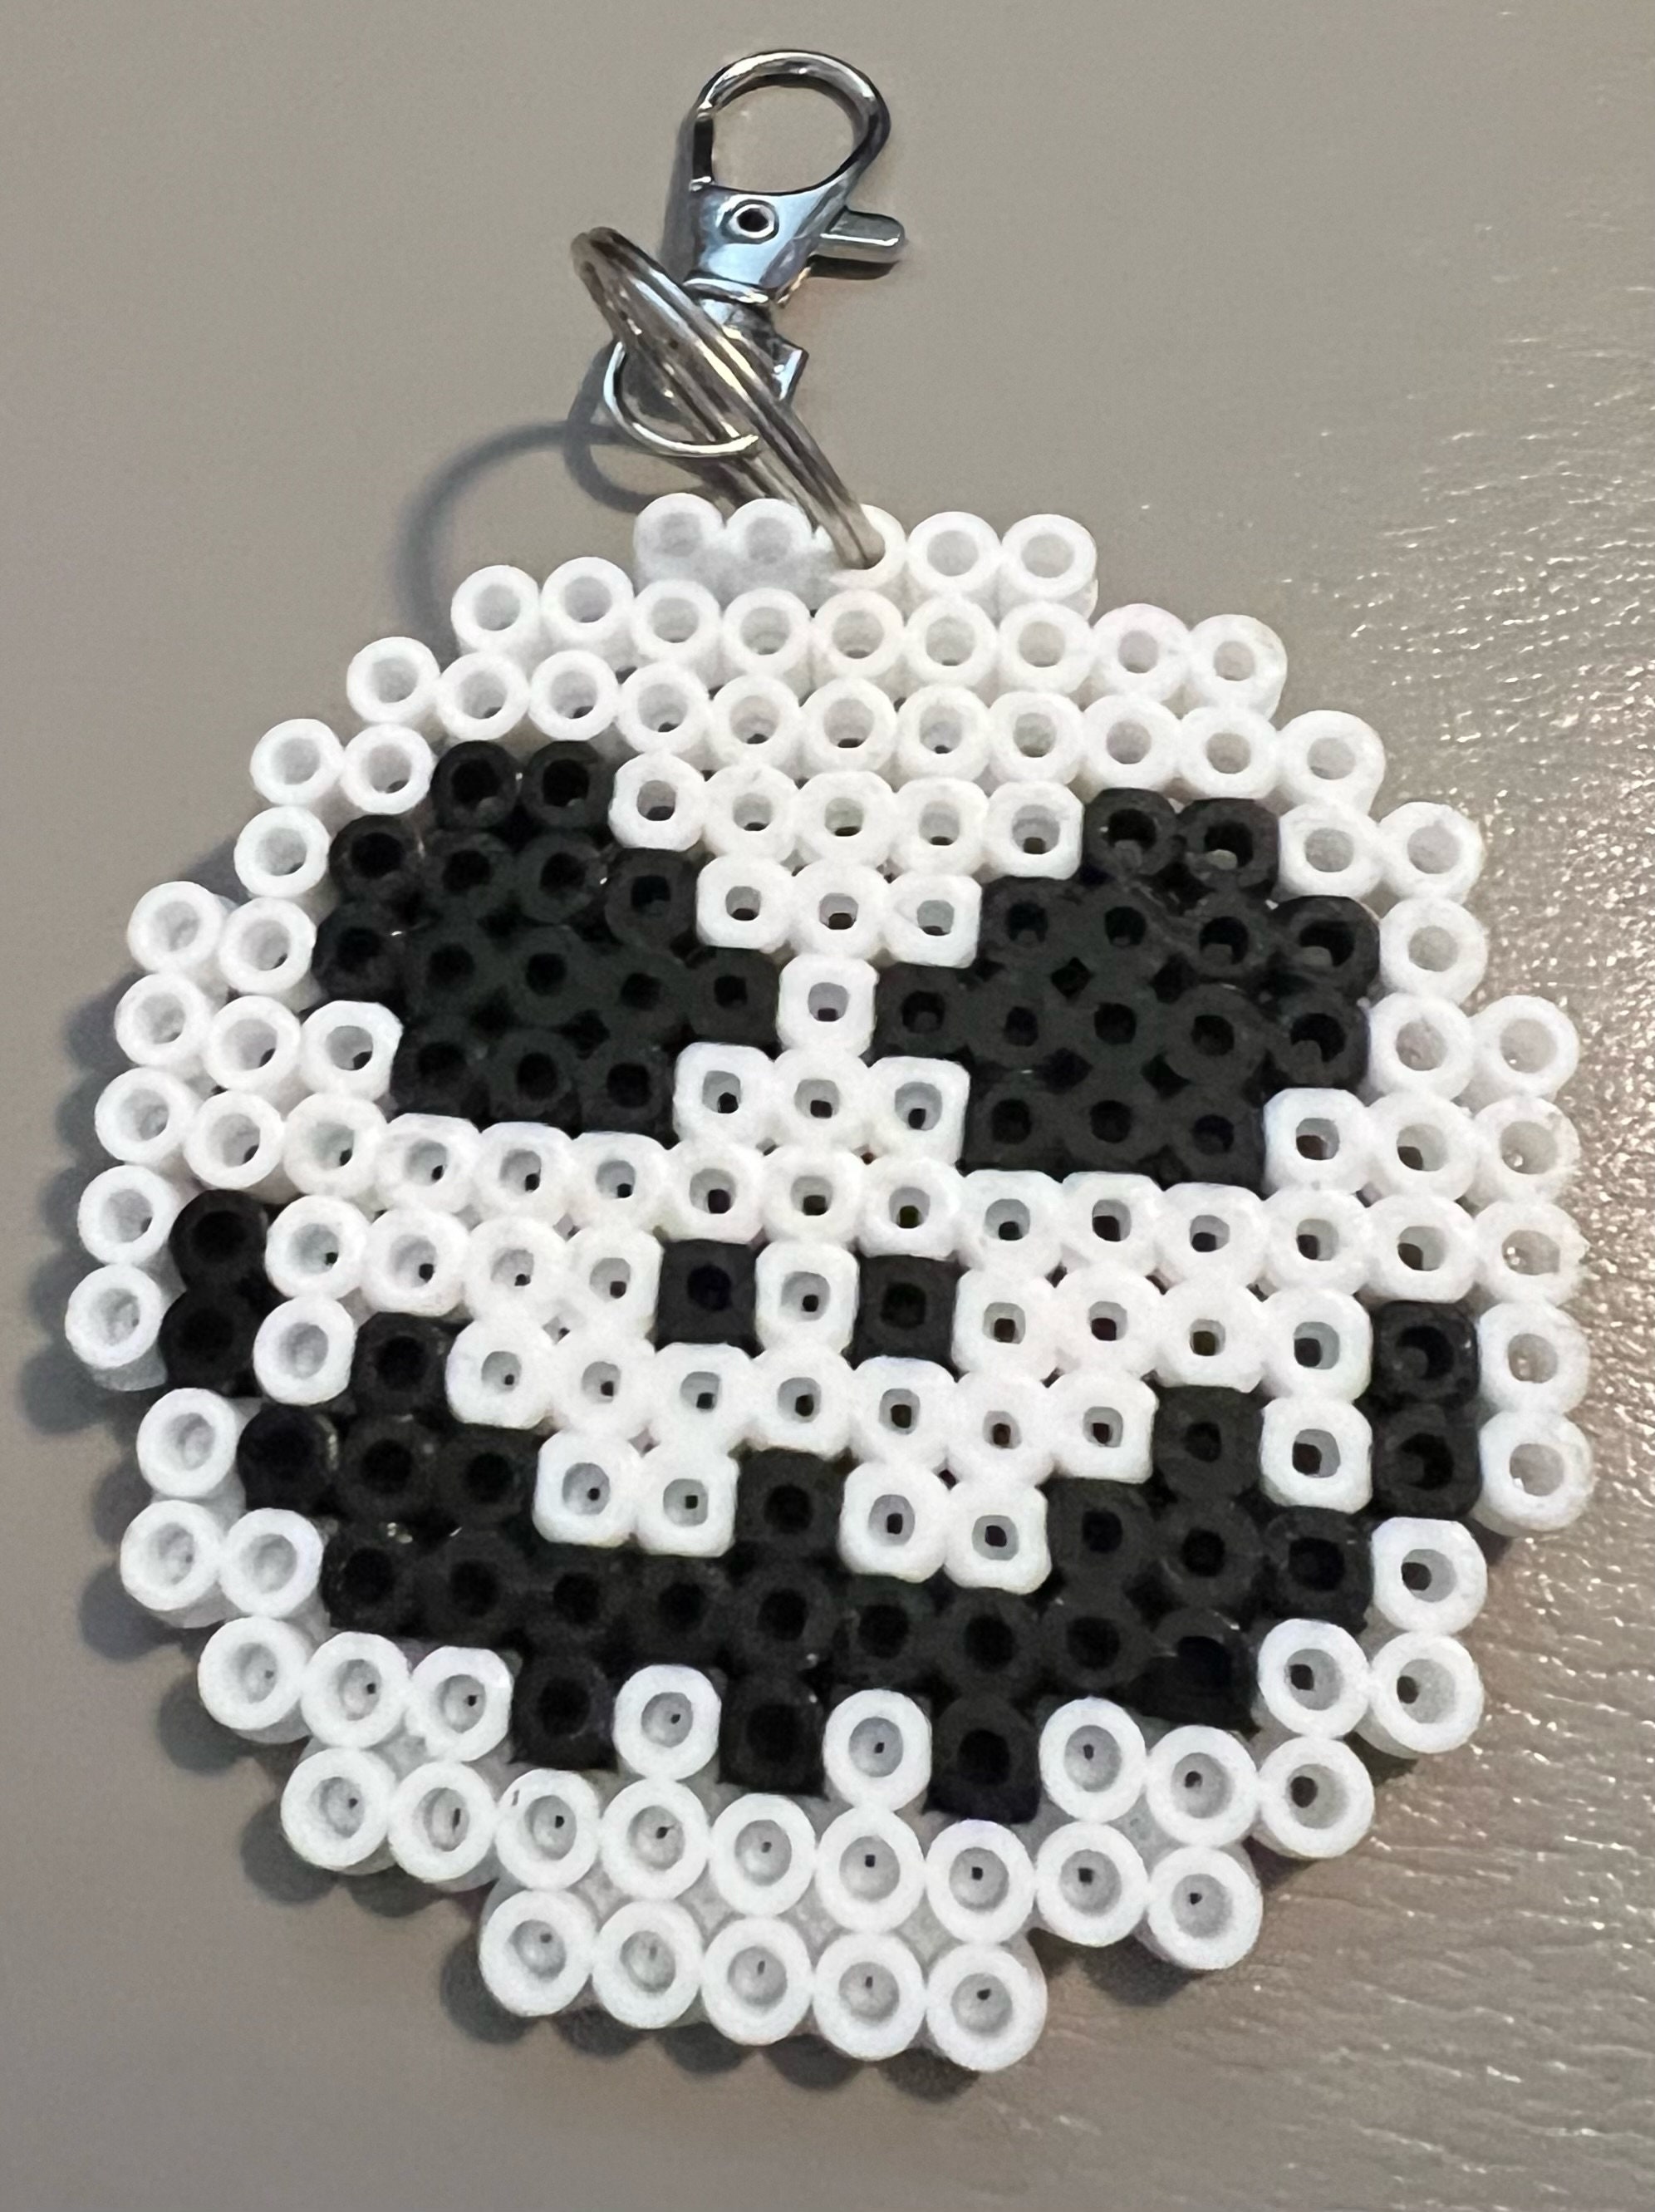 Kawaii Cat 8bit Pixel Perler Beads Art, Can Be Fridge Magnet, Keychain,  Phone Charm and Badge. 